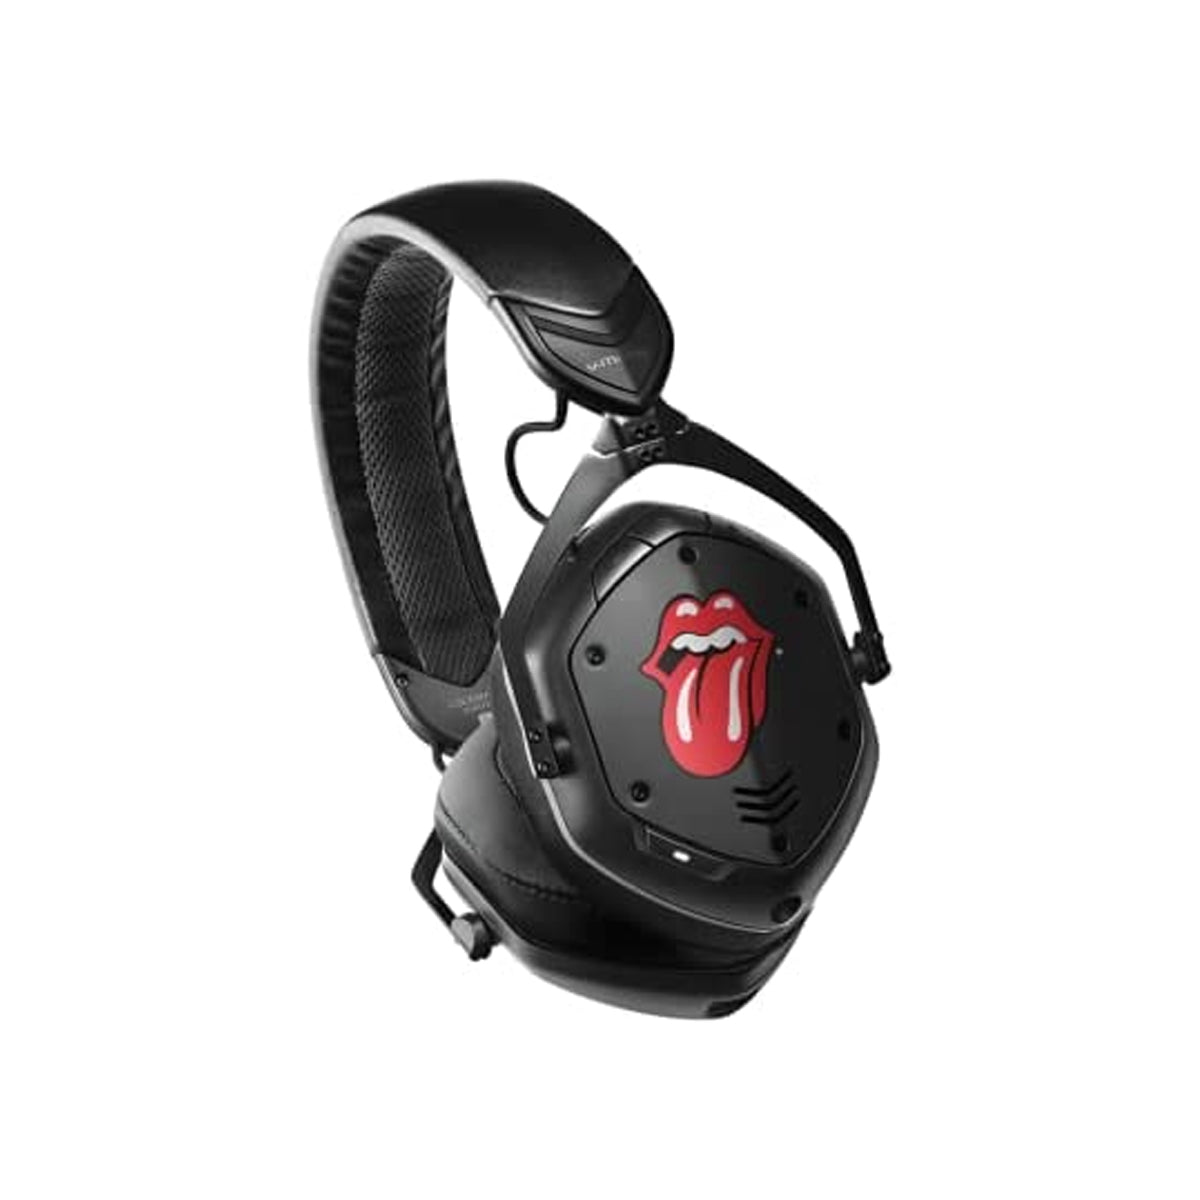 Rolling Stones X No Filter V-moda Crossfade 2 Wireless Over-ear